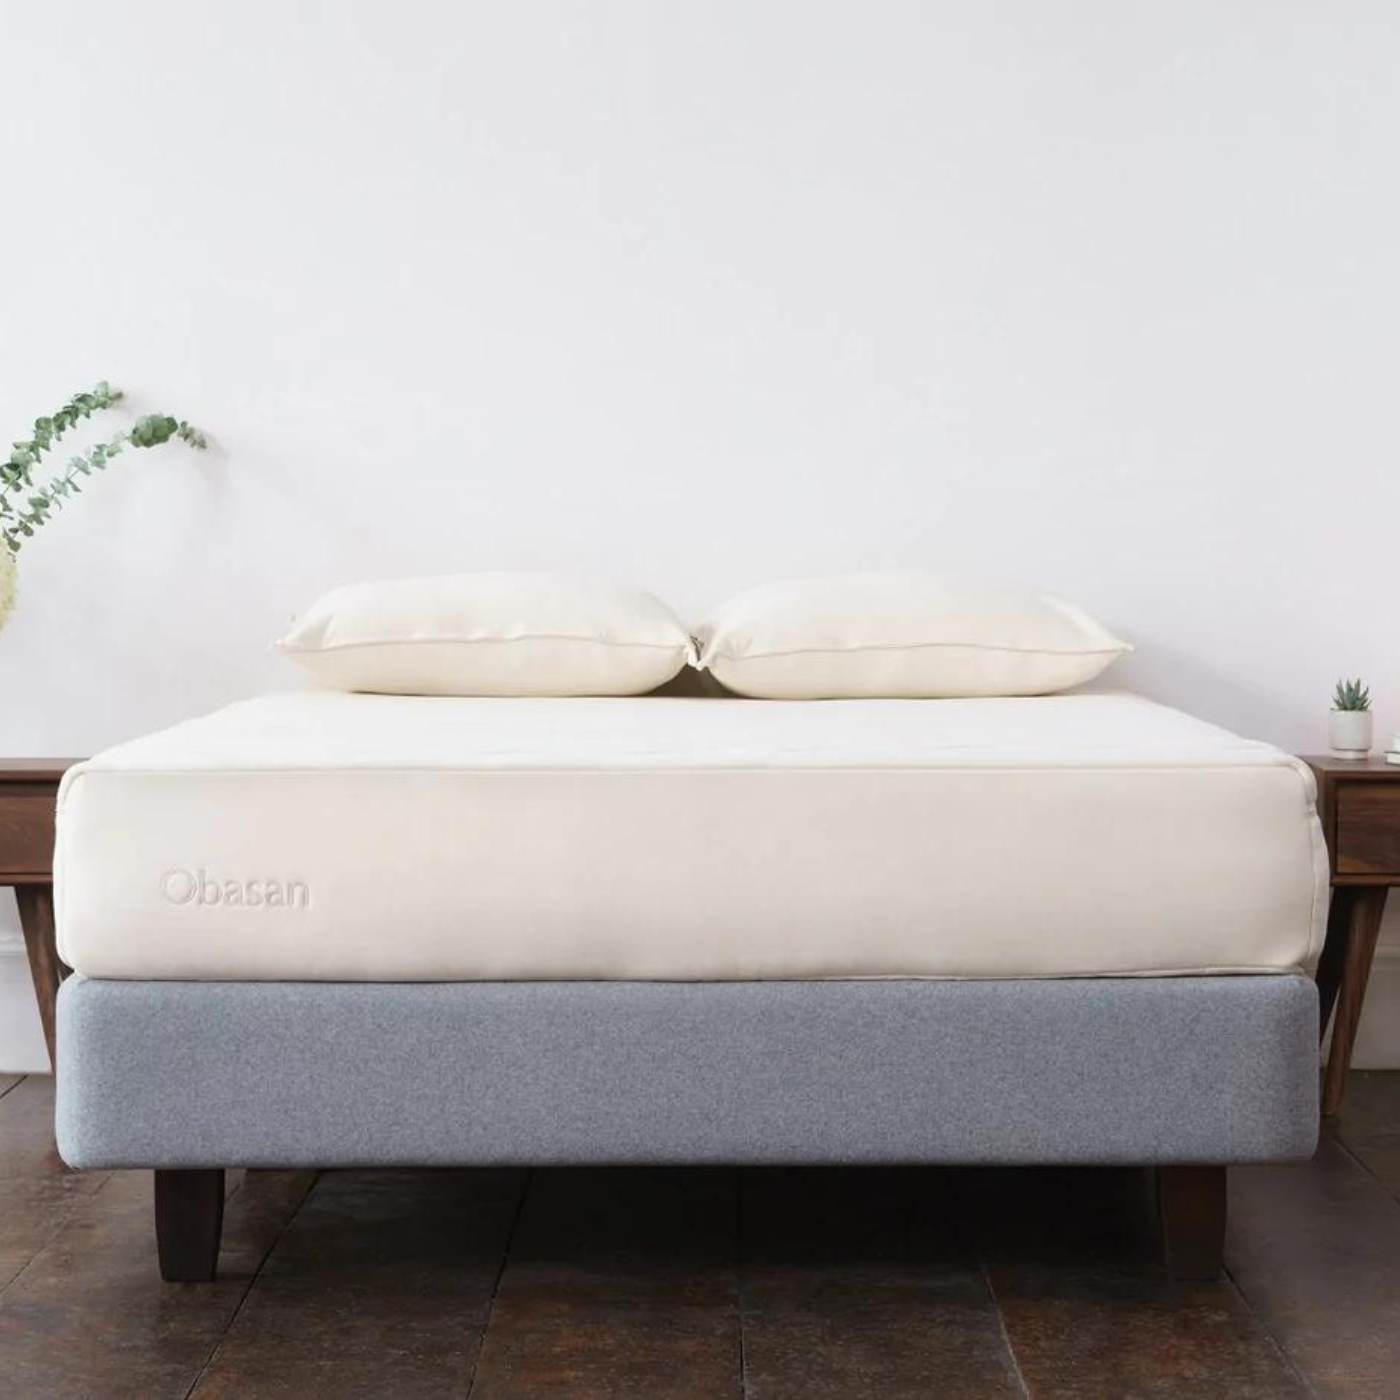 beautiful obasan luxury bed in bedroom